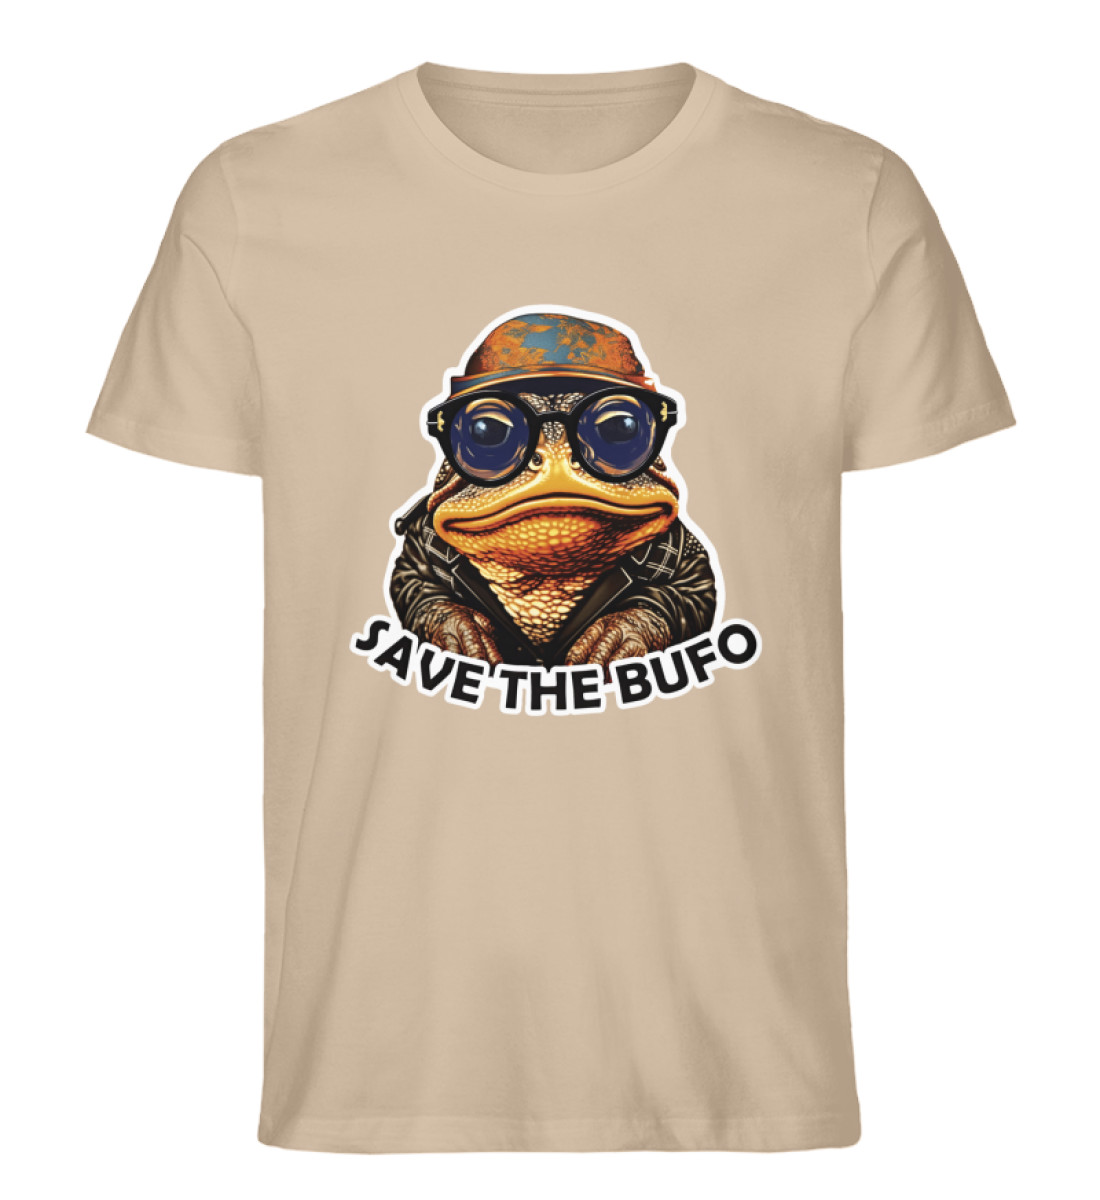 Save The Bufo! 5-MeO-DMT - Premium Organic T-Shirt - Men Premium Organic Shirt-6886